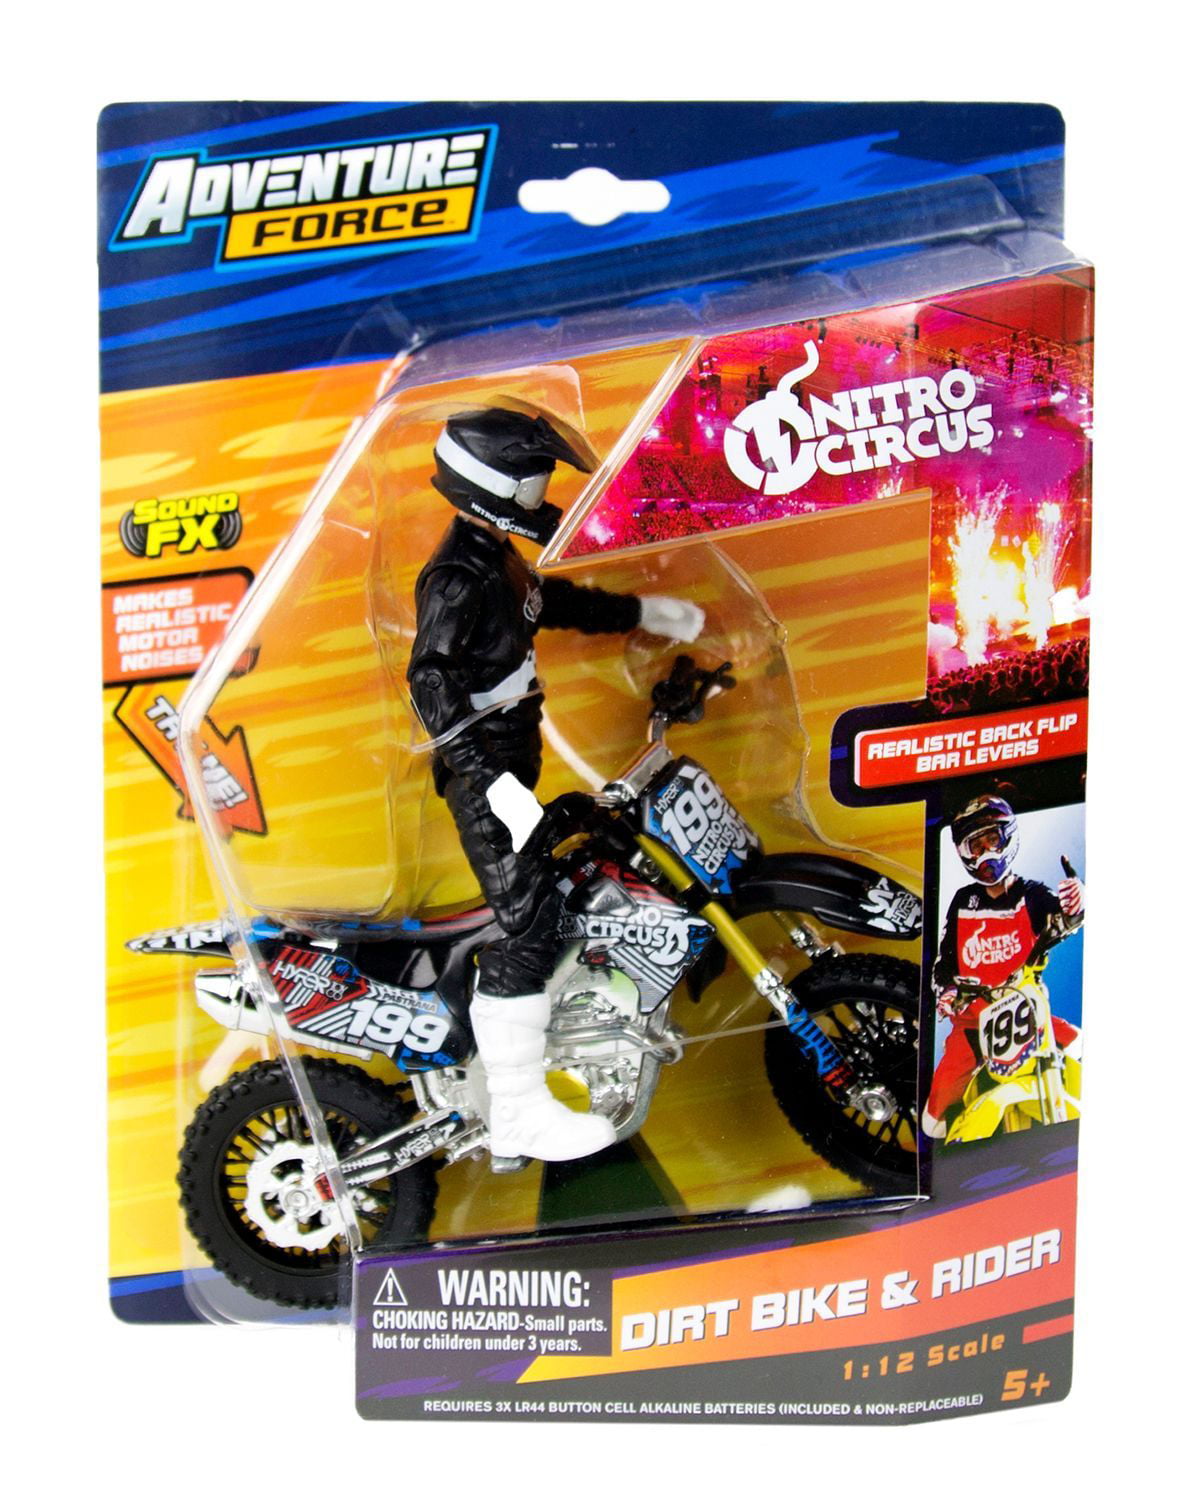 Adventure Force Nitro Circus Dirt Bike & Rider Toy, 112 Replica